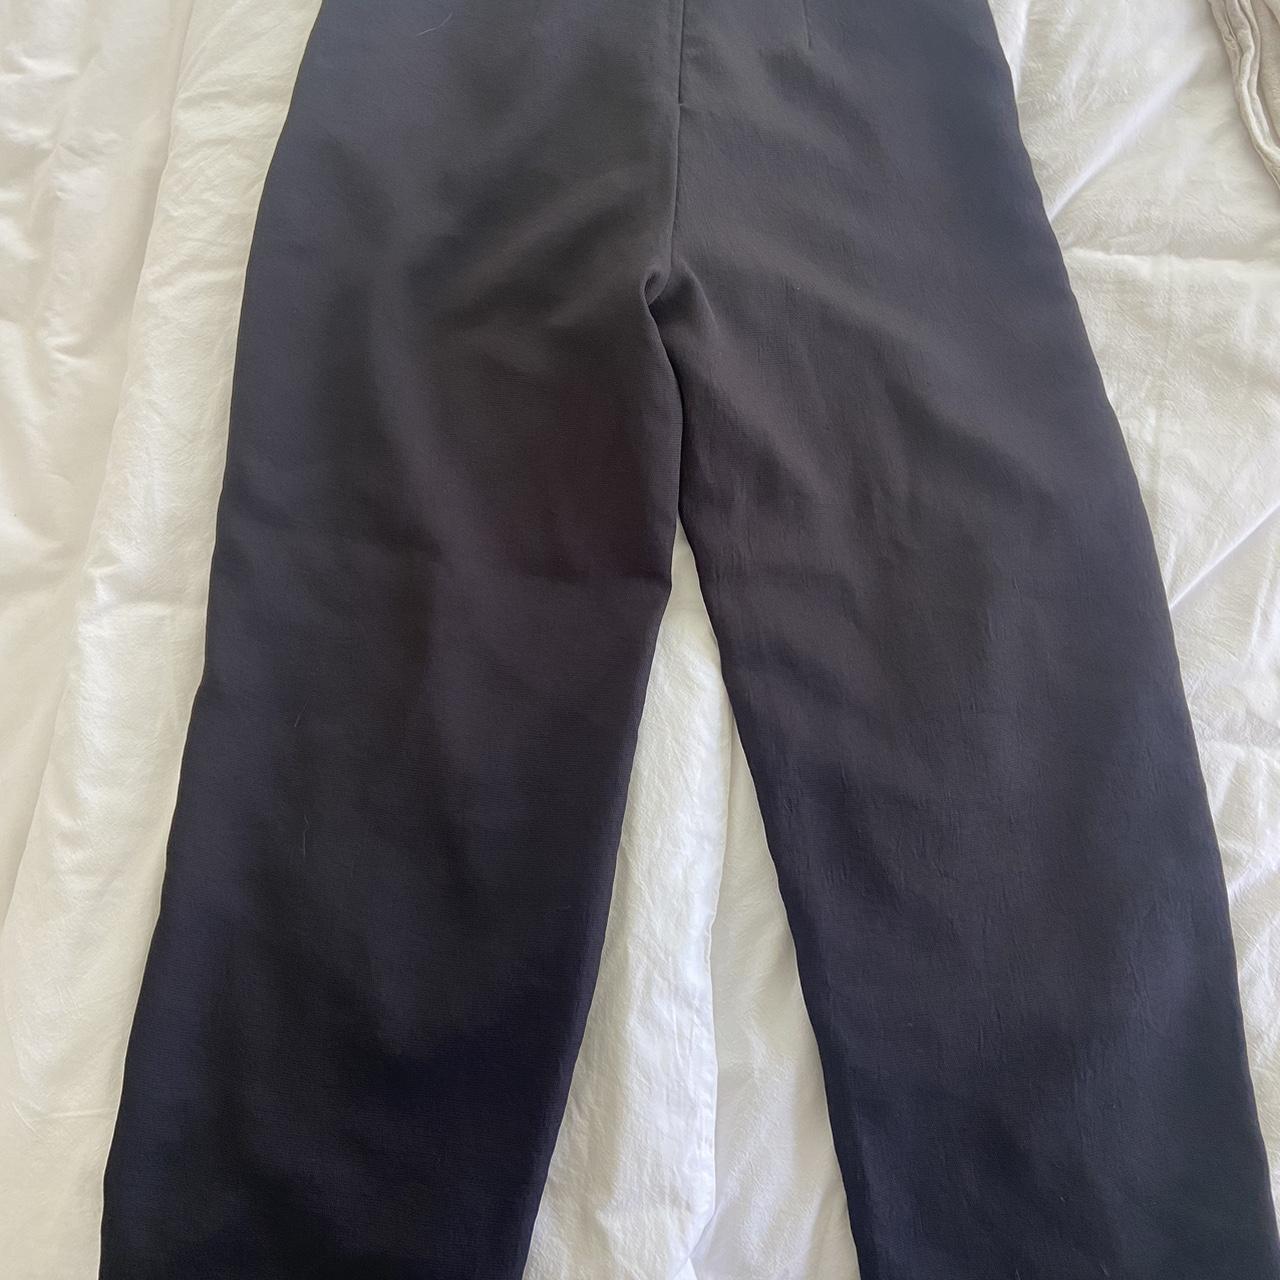 Kookai Oyster Pants (cropped style) Size 36 Great... - Depop